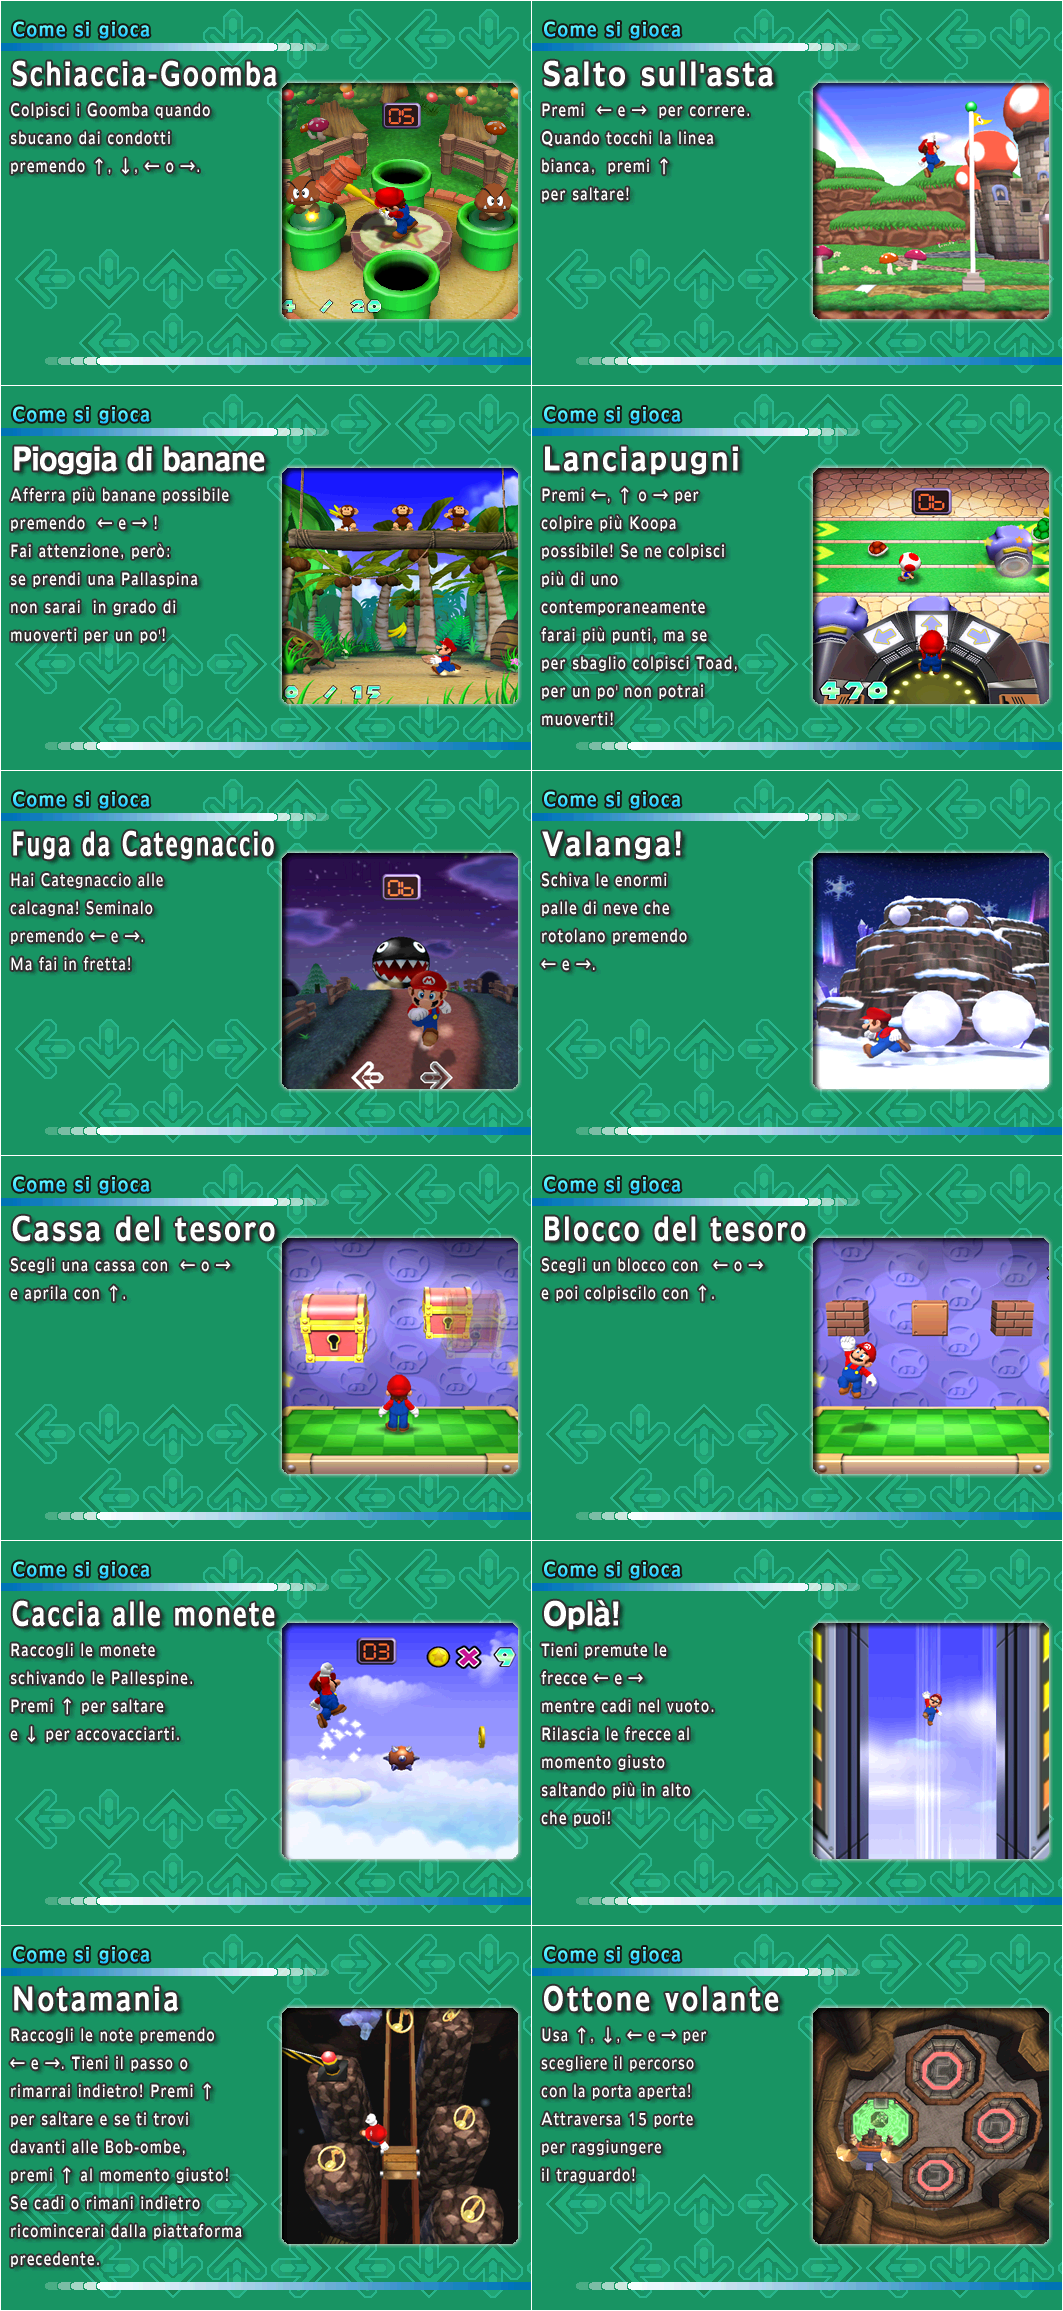 Dance Dance Revolution: Mario Mix - Minigame Instructions (Italian)